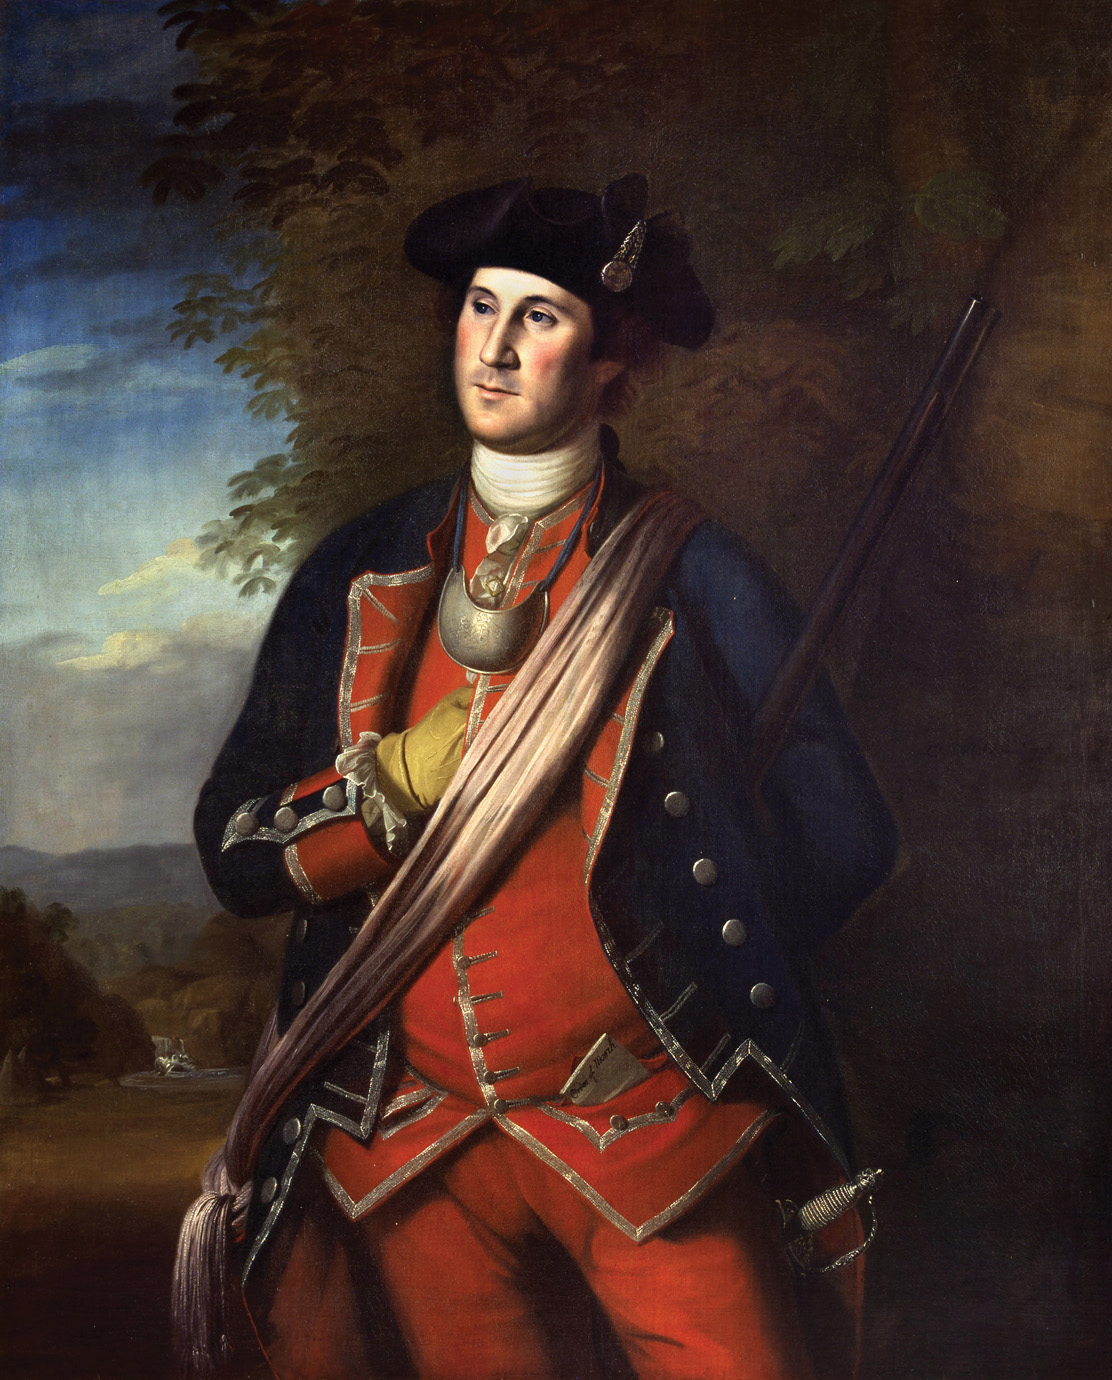 Lt. Col. George Washington, deputy commander of the Virginia Regiment